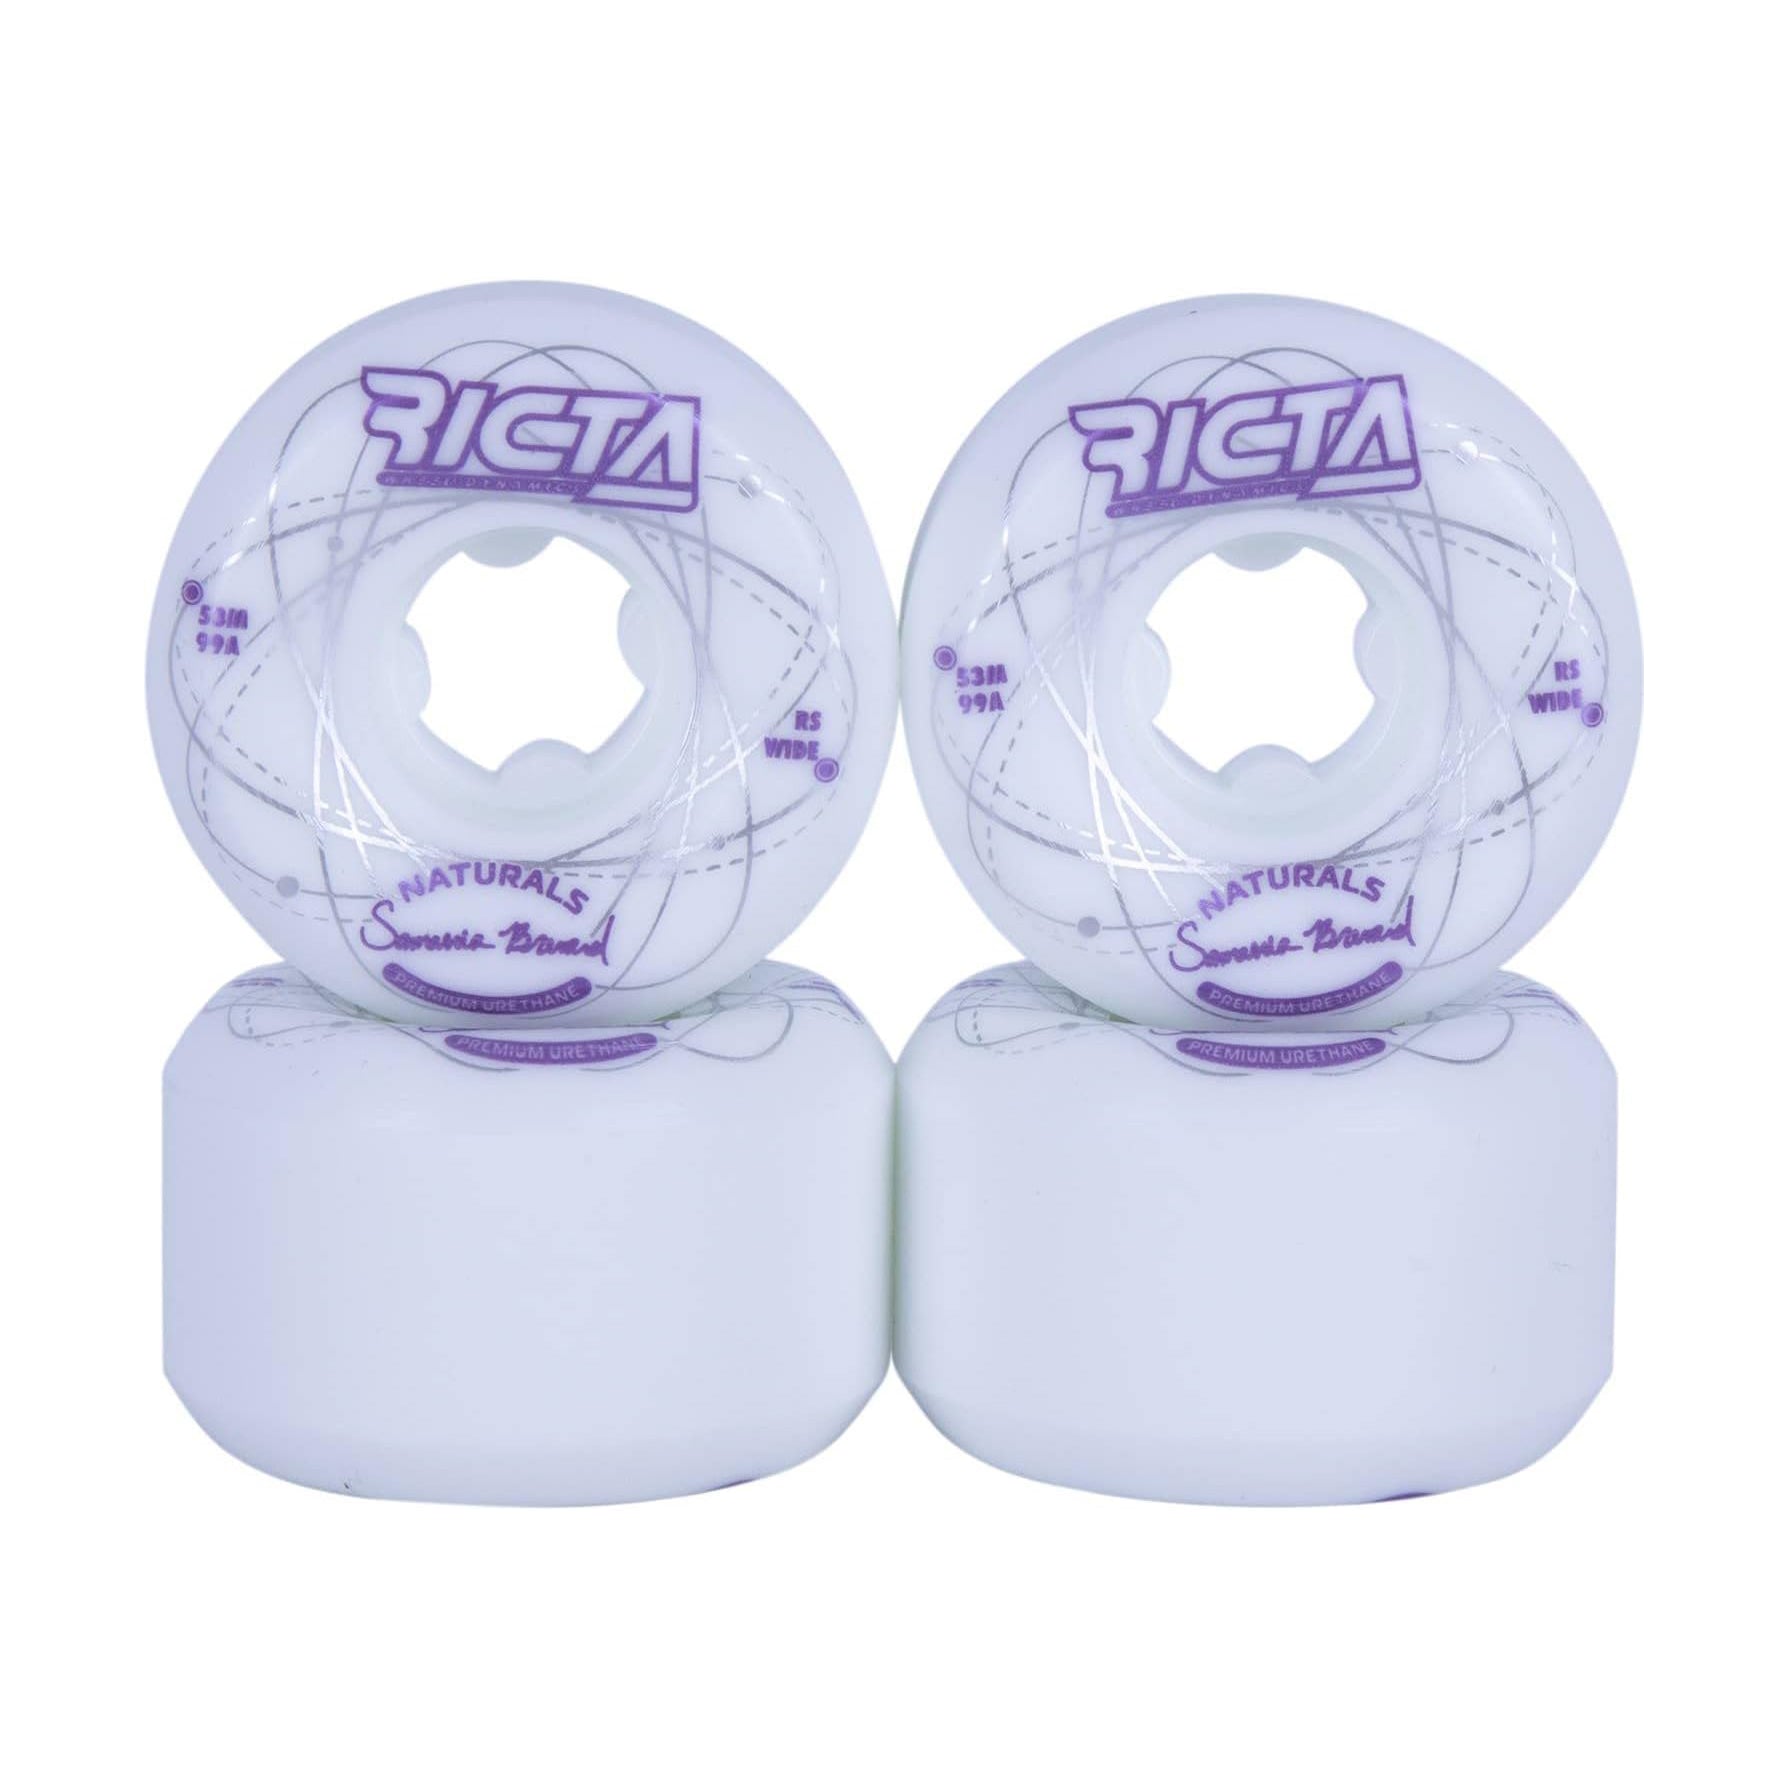 Ricta Orbital Natural 99a Wheels White Purple 53mm Wide